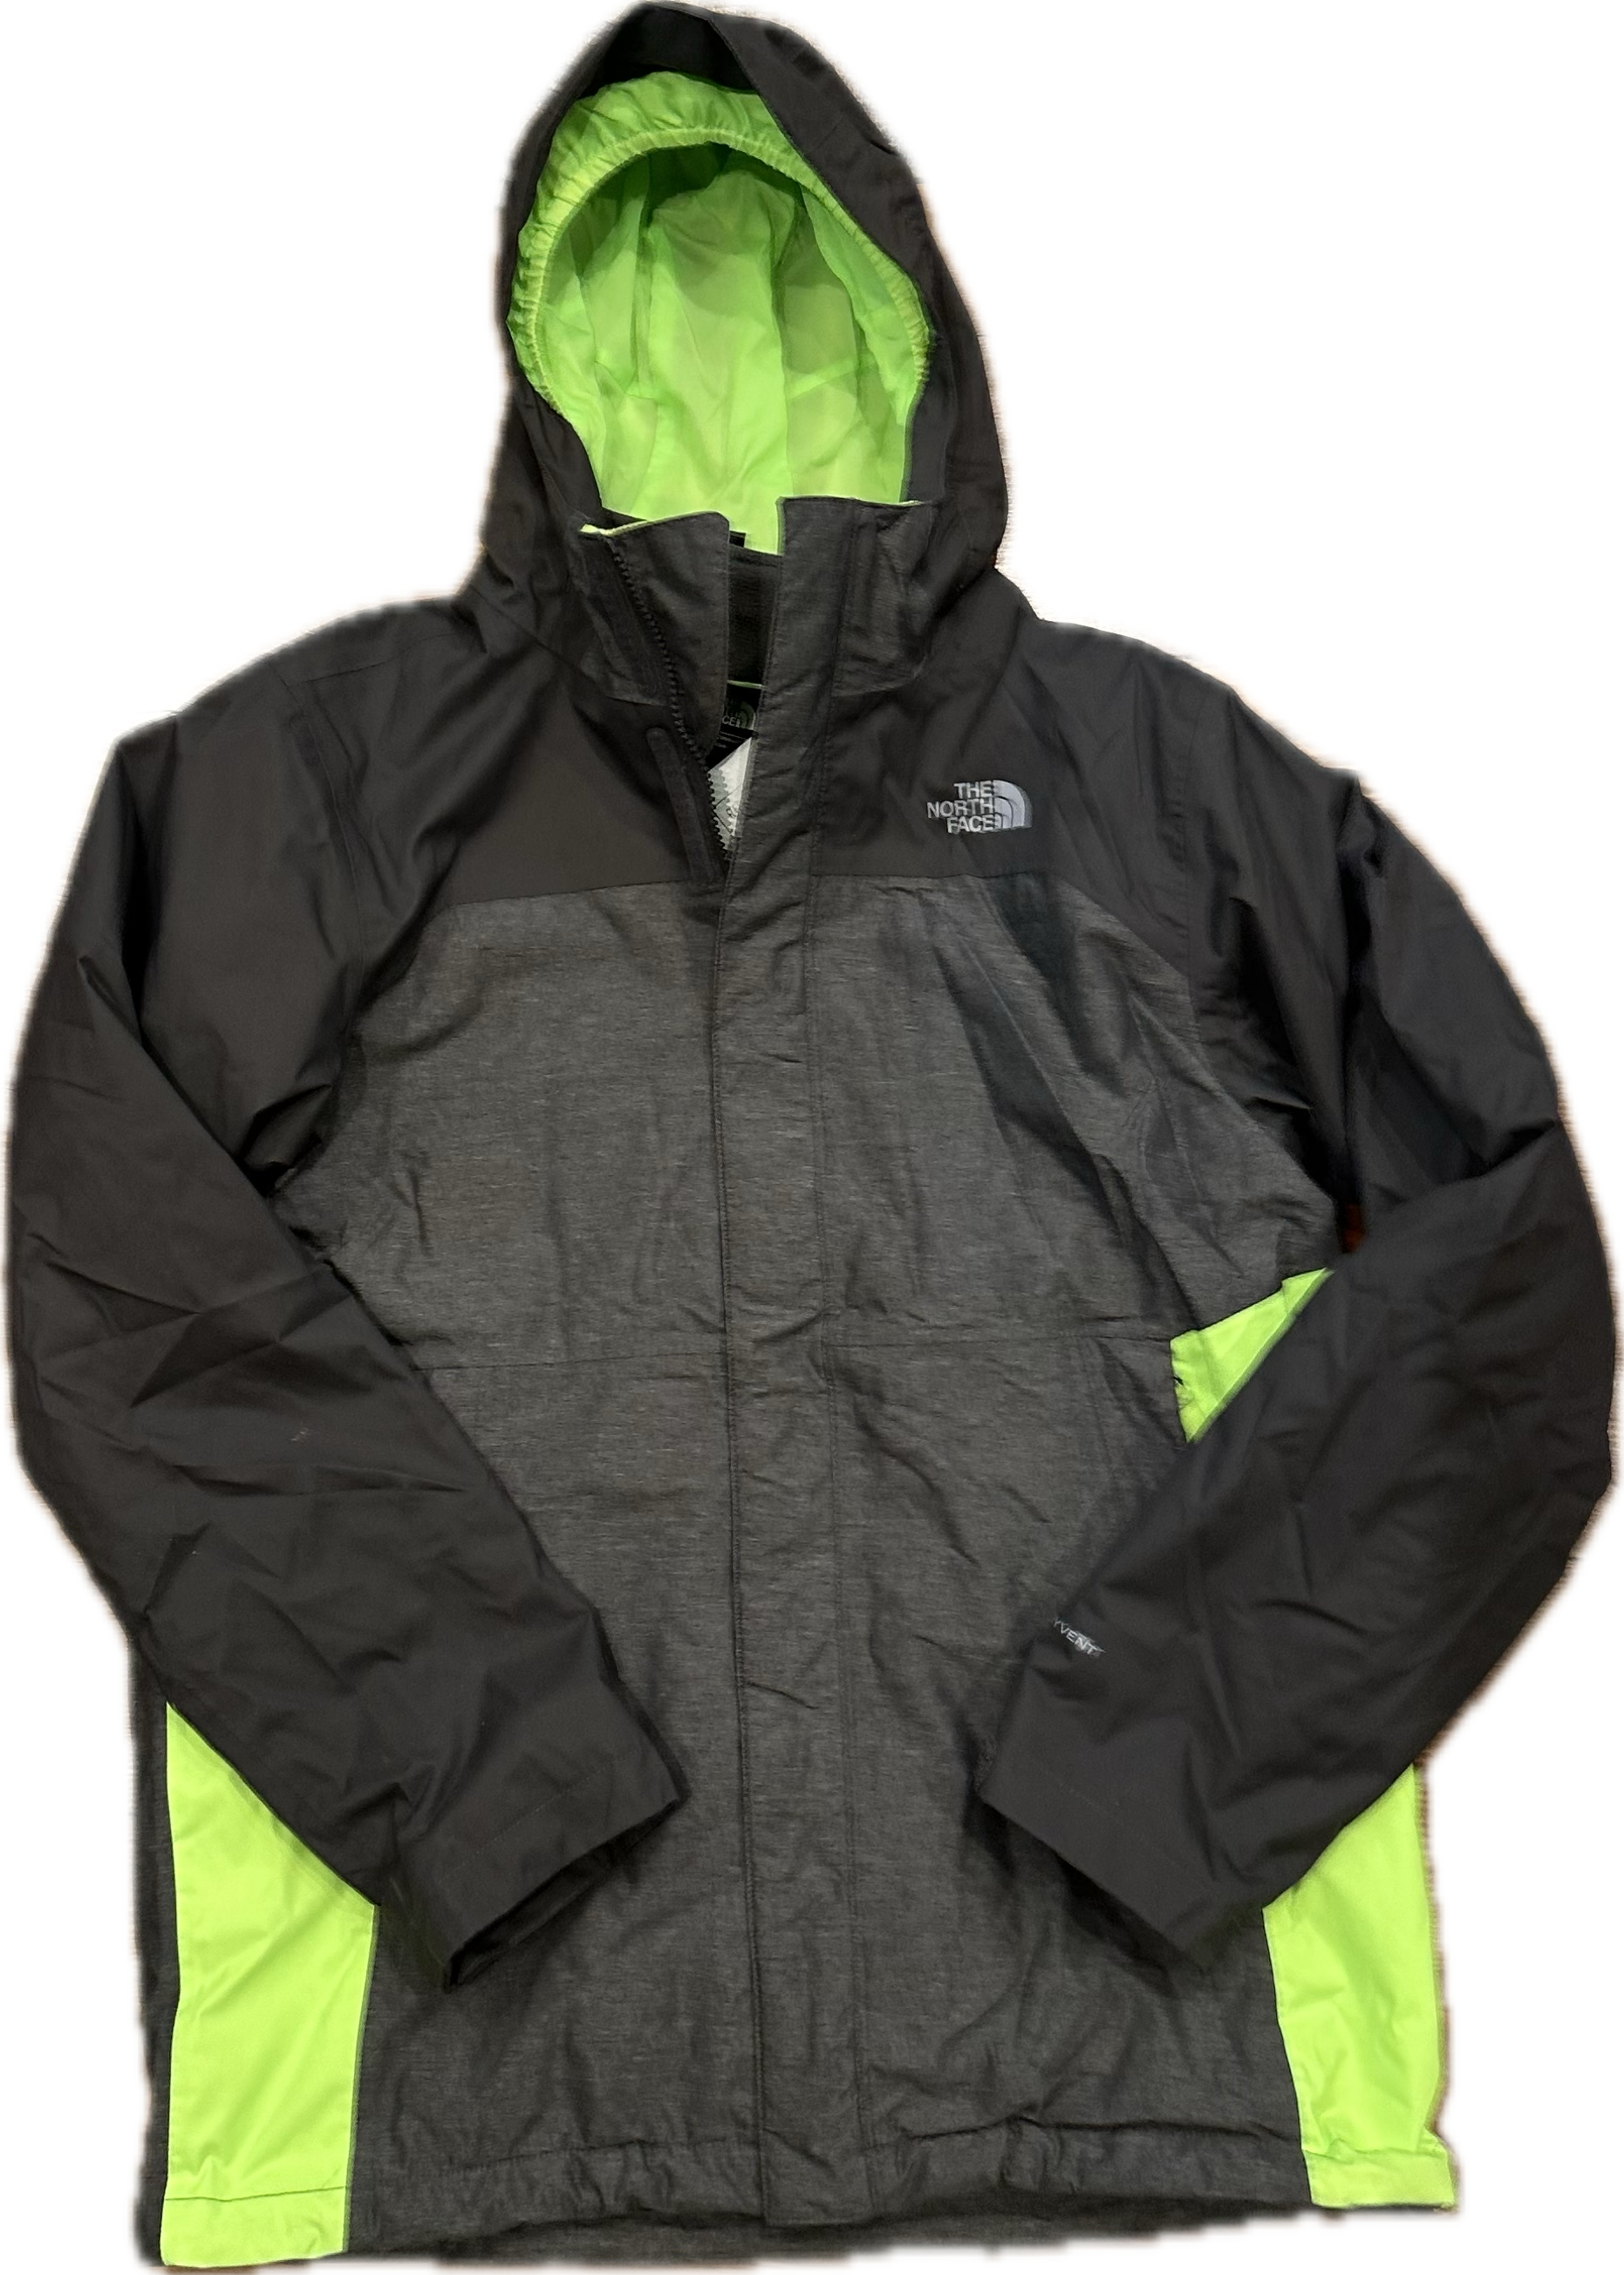 The North Face Ski & Fleece Jacket, Gray/Lime Boys Size XL (18/20)